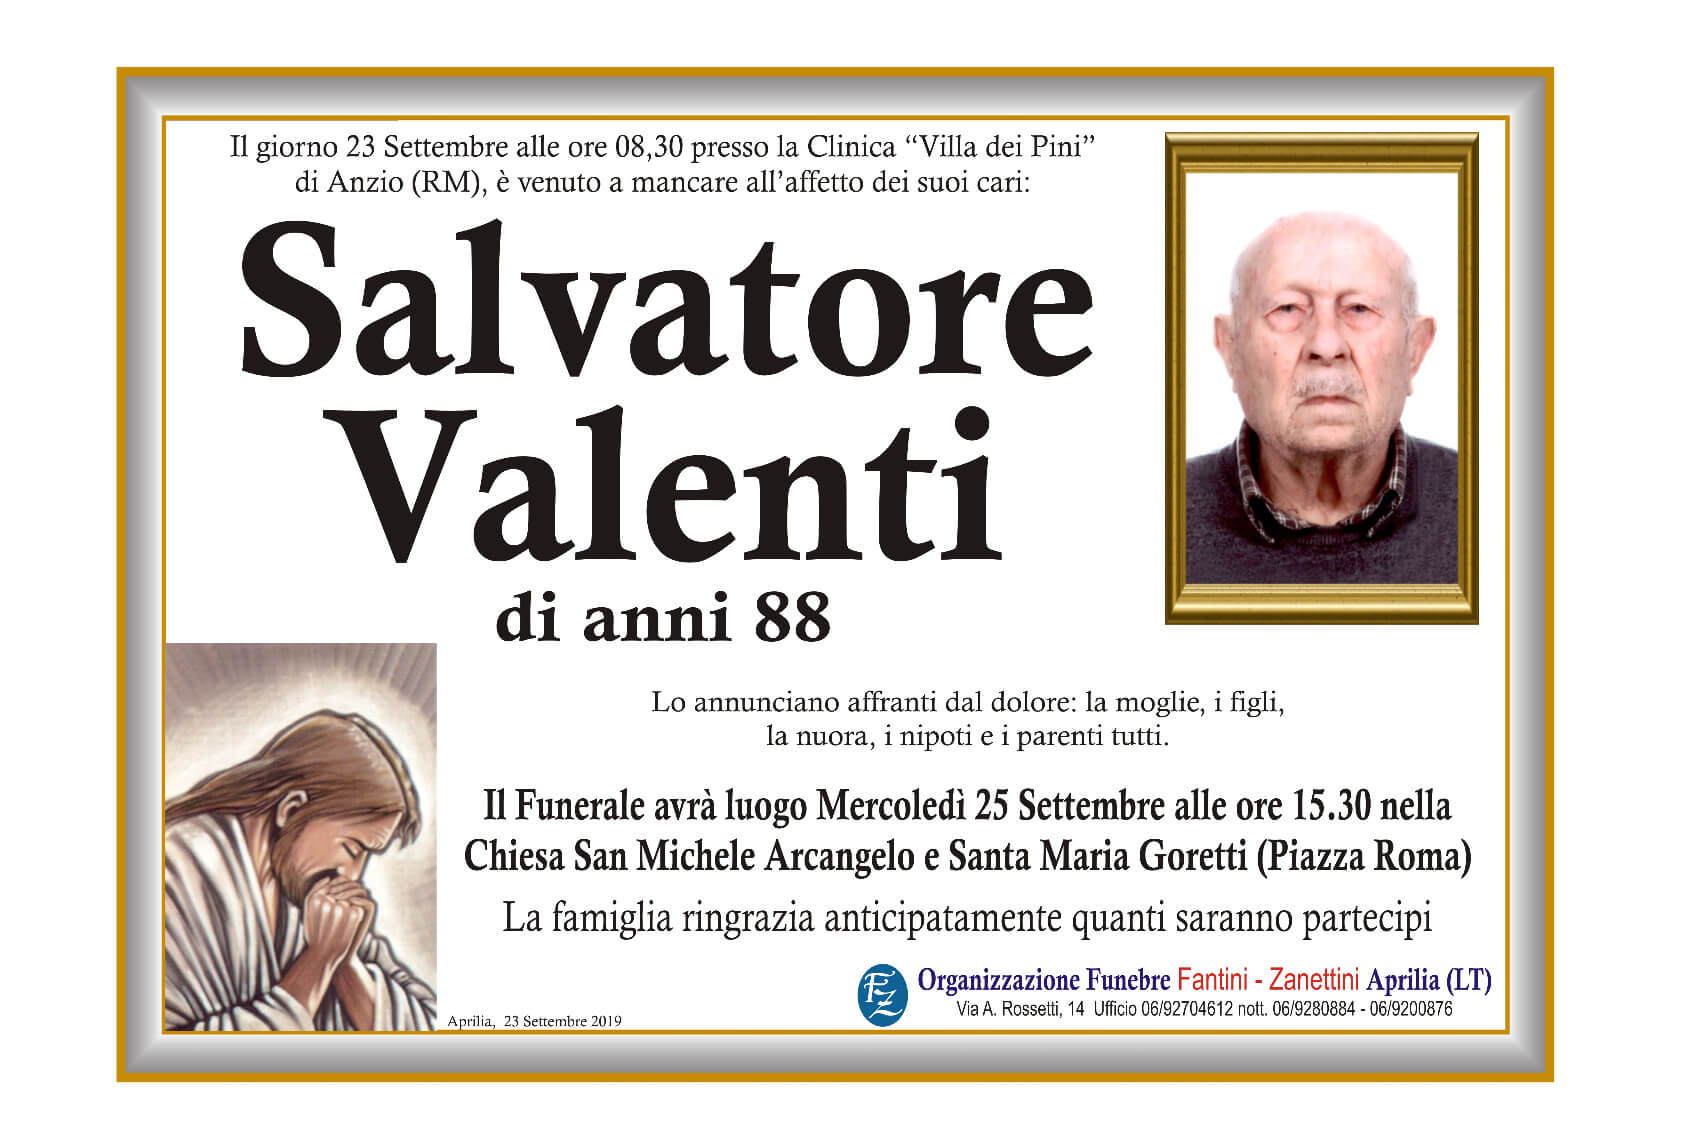 Salvatore Valenti